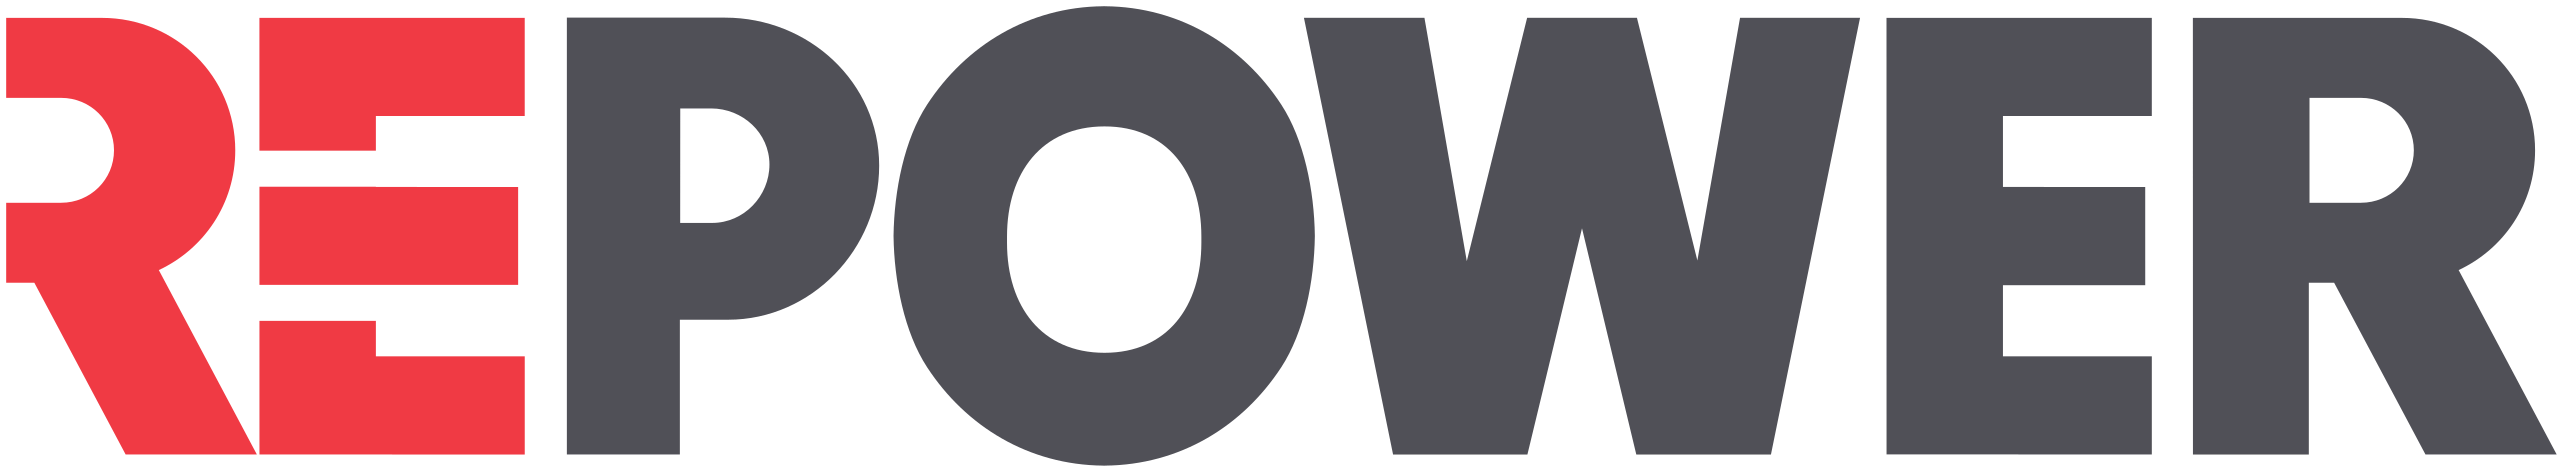 Repower Logo